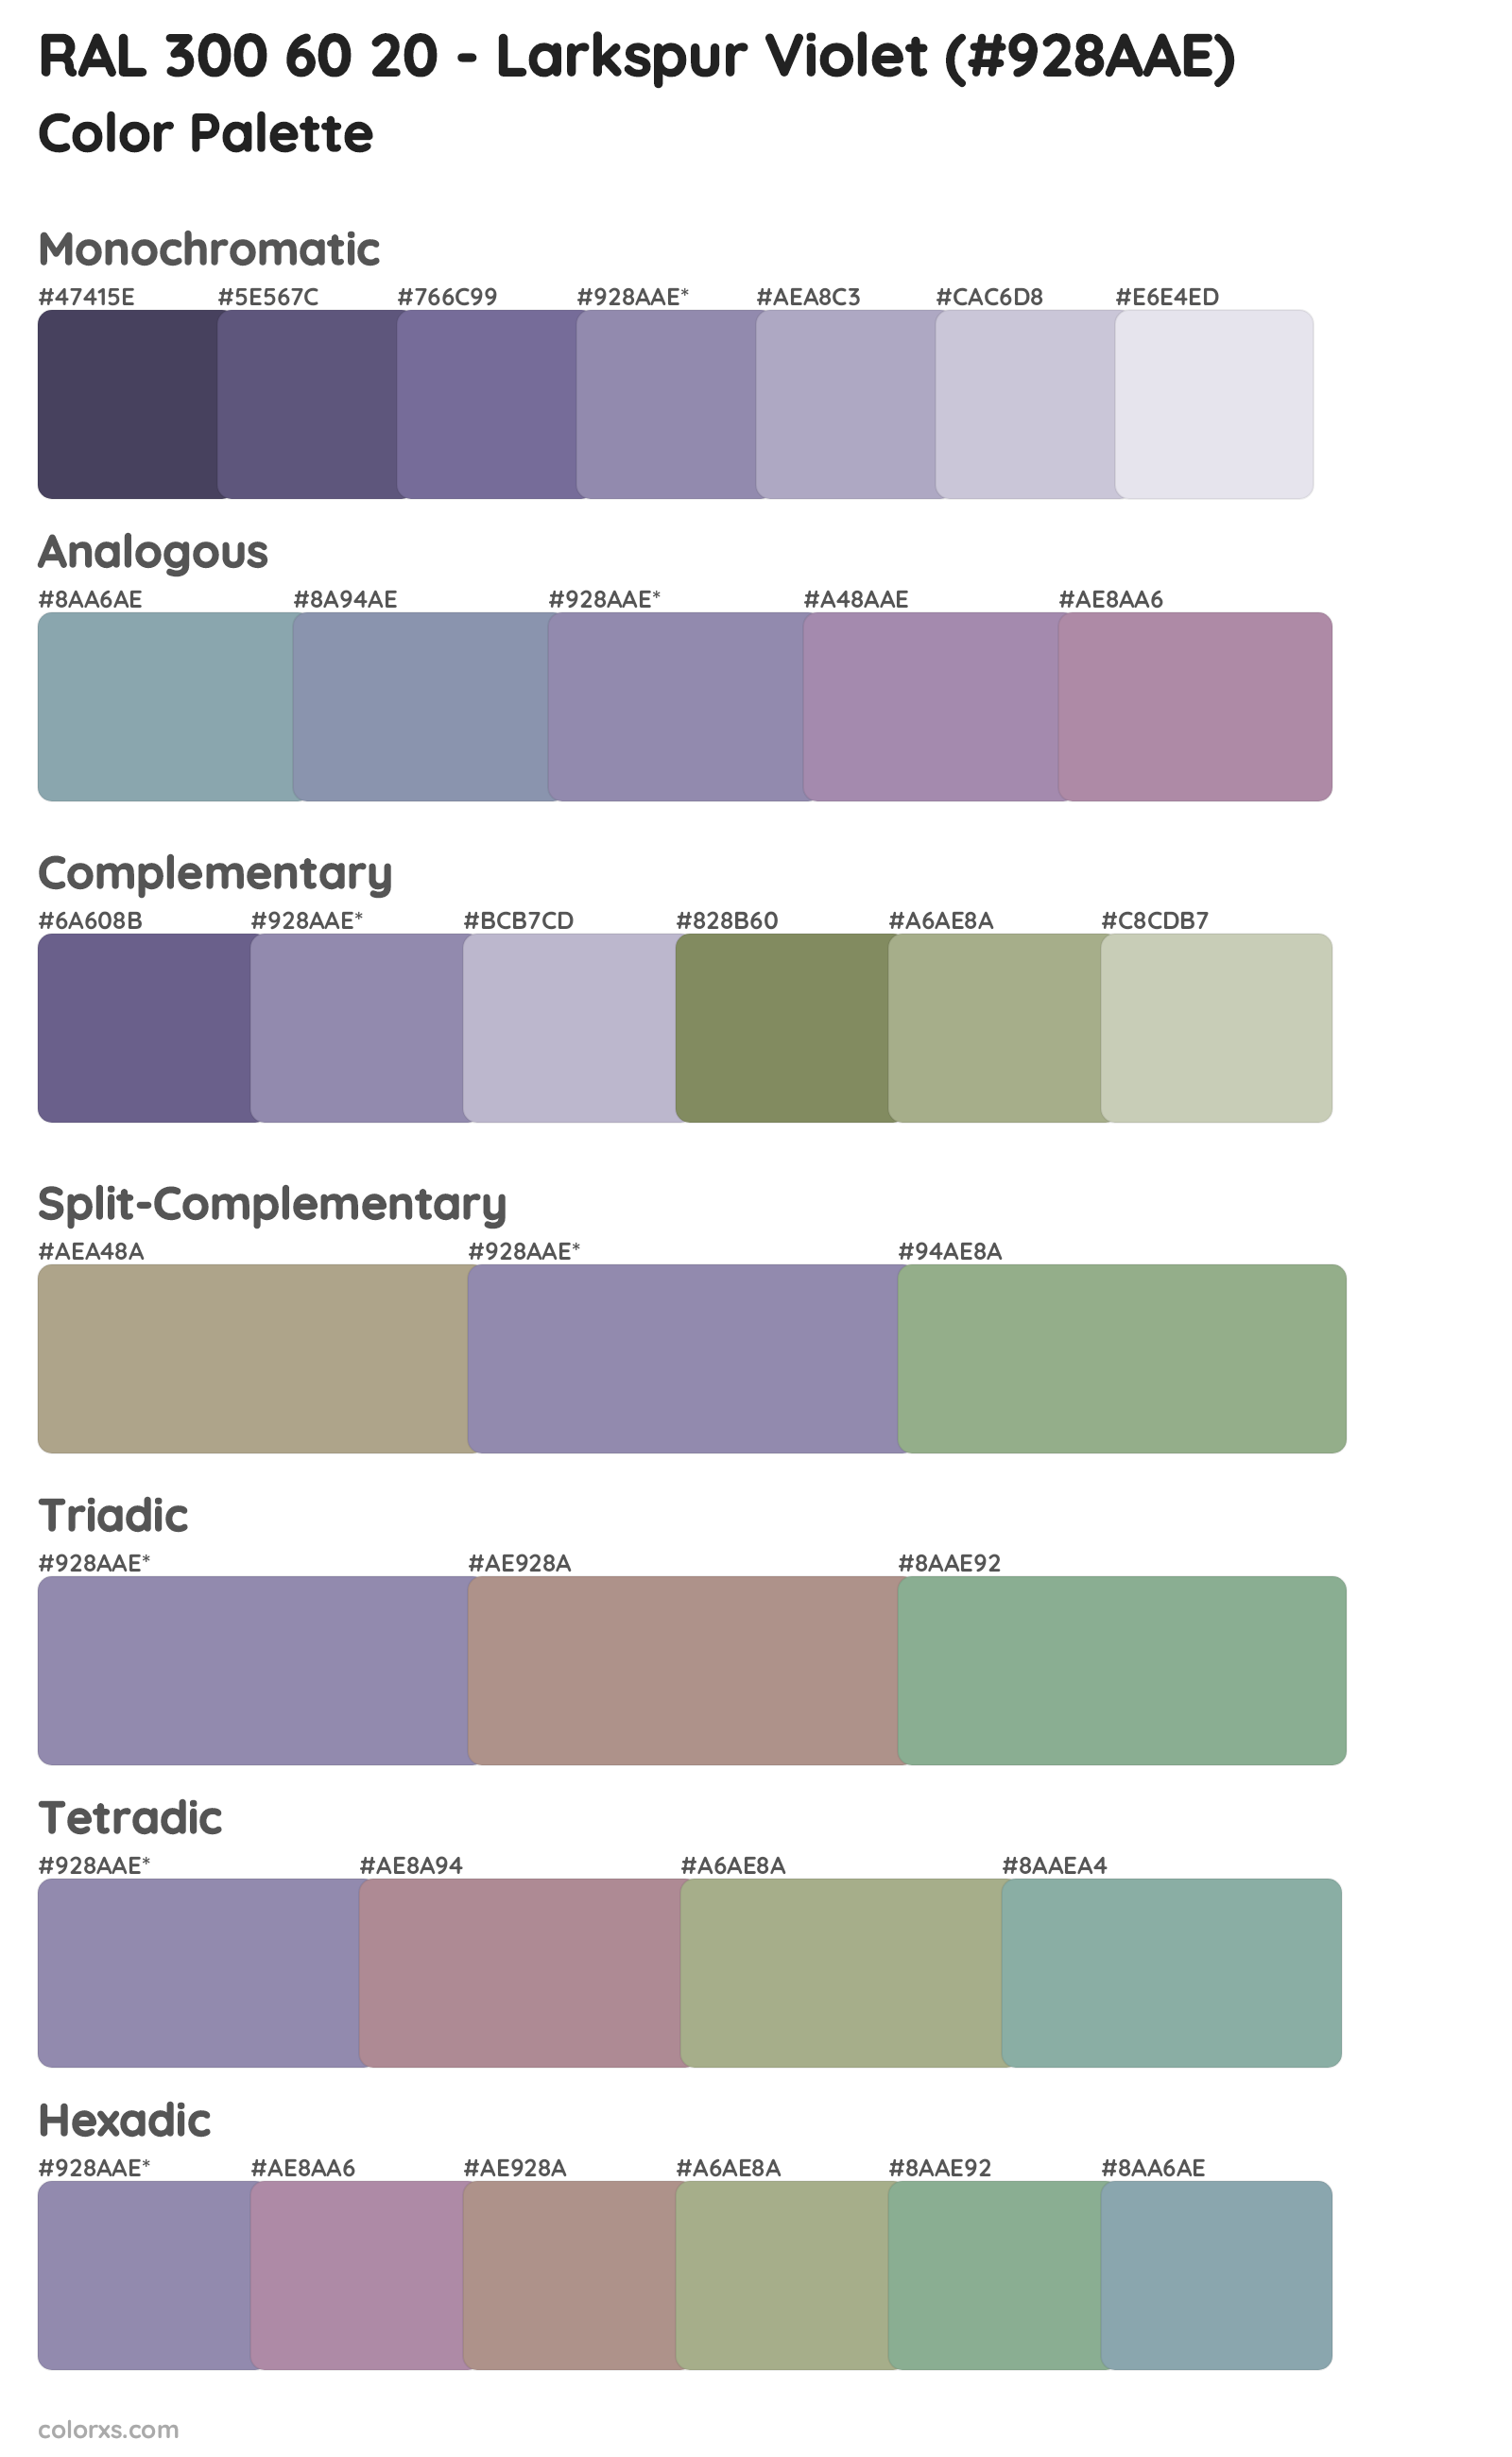 RAL 300 60 20 - Larkspur Violet Color Scheme Palettes